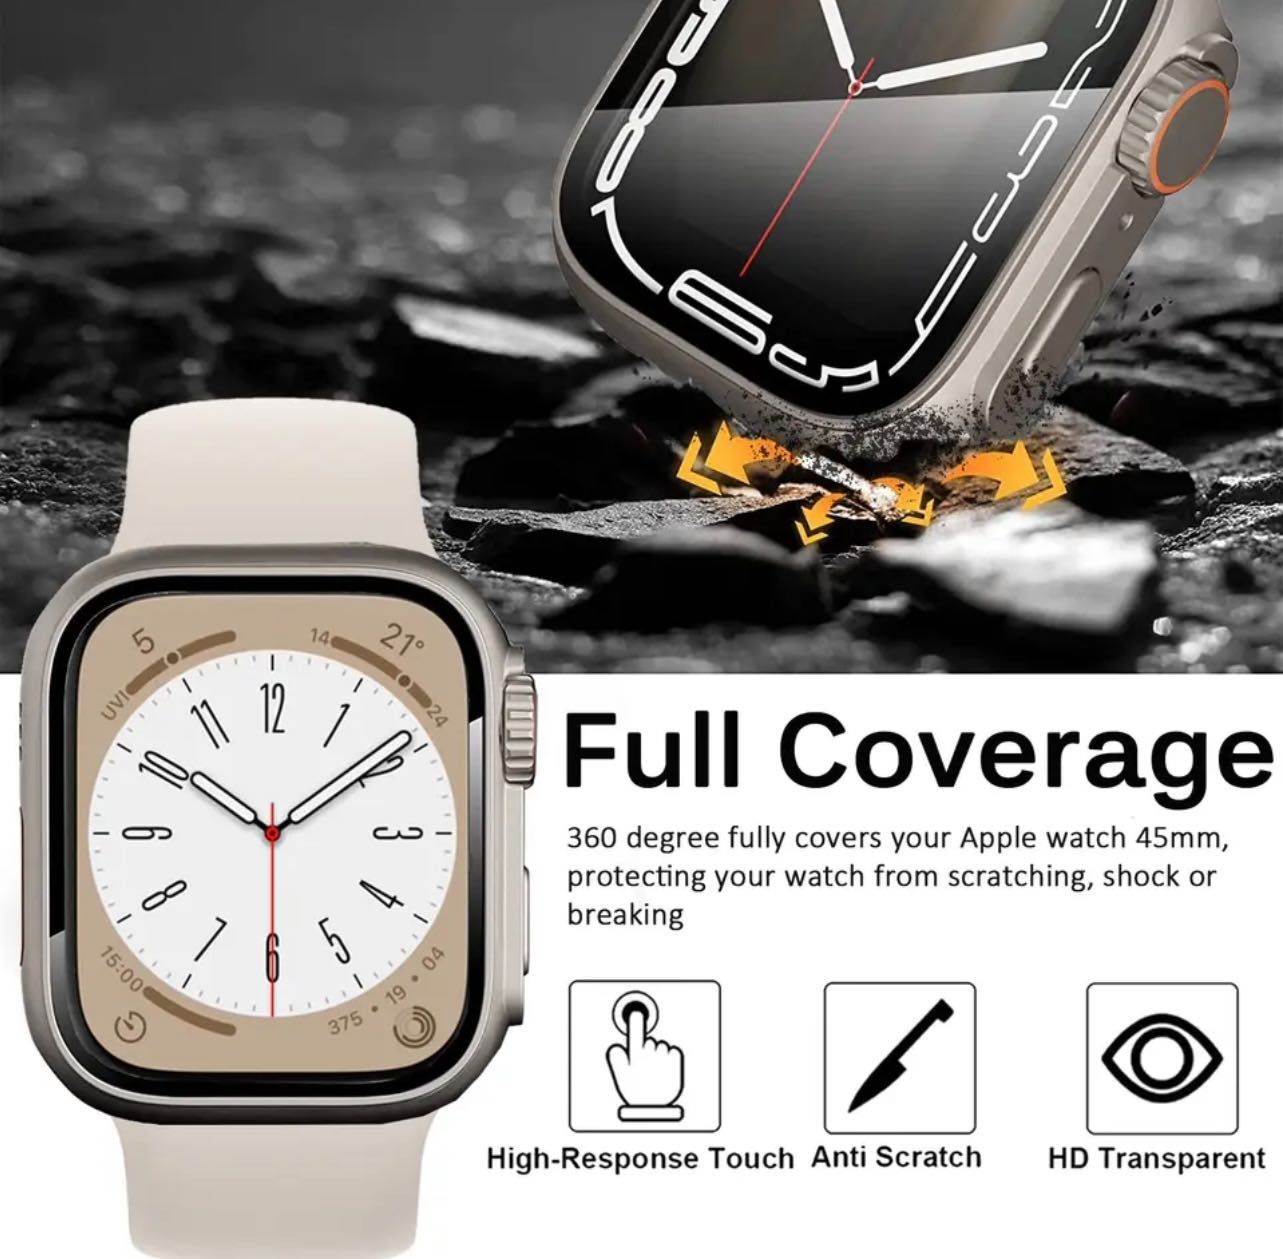 Чохол-бампер Apple Watch Series 1 2 3 4 5 6 SE під ULTRA чехол ультра